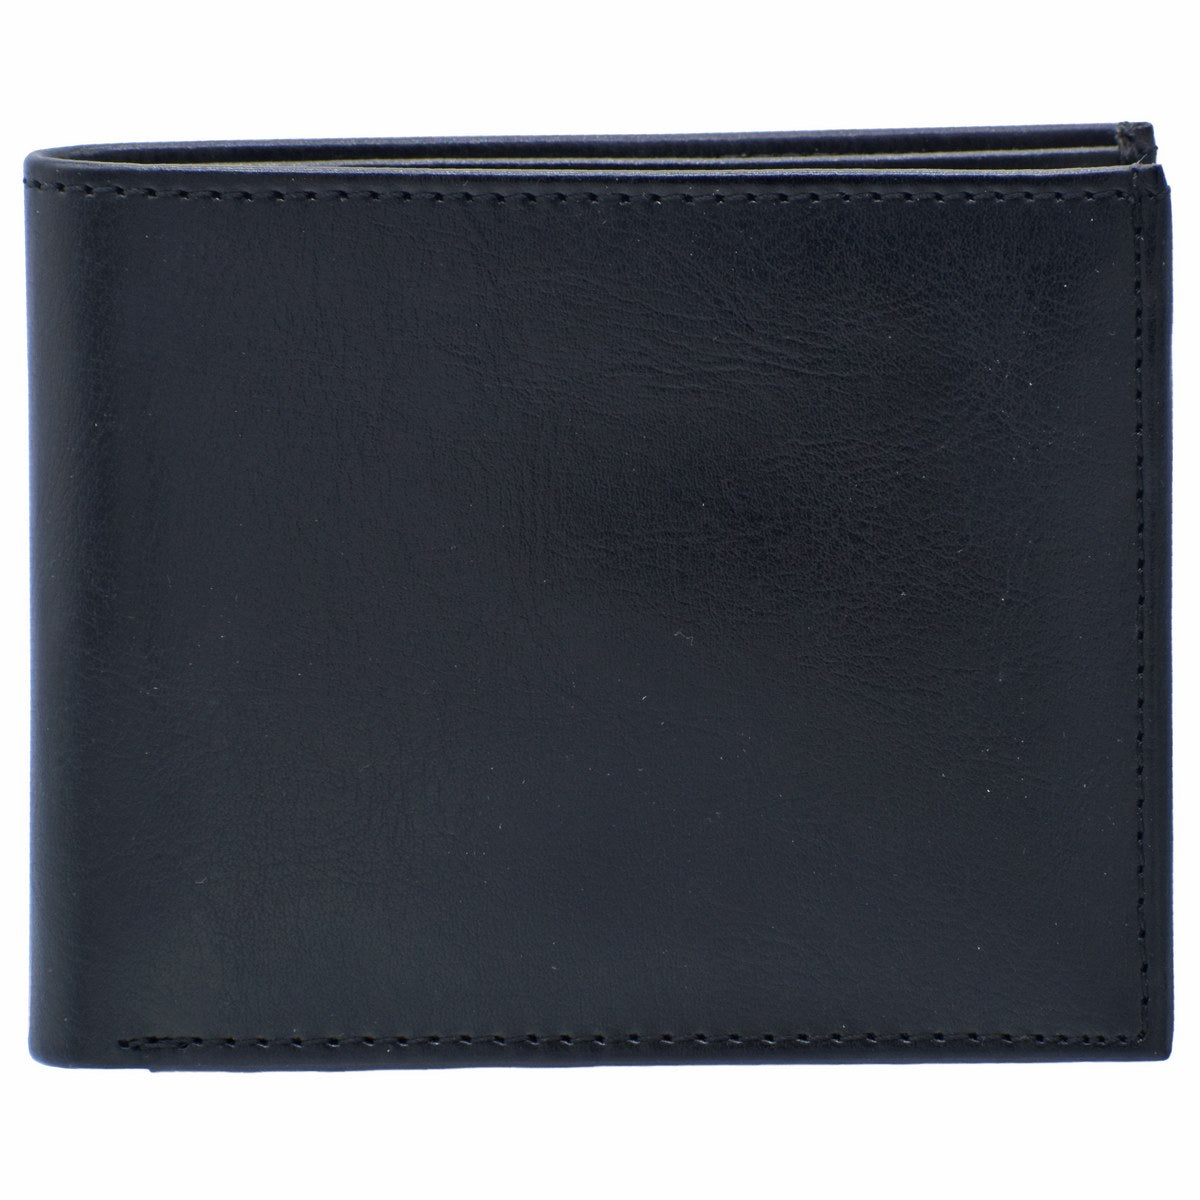 Black Leather Gents Zipper Wallet - For Employee, Corporate, Client or Dealer Gifting, Promotional Freebie, Return Gift JAGW38BK